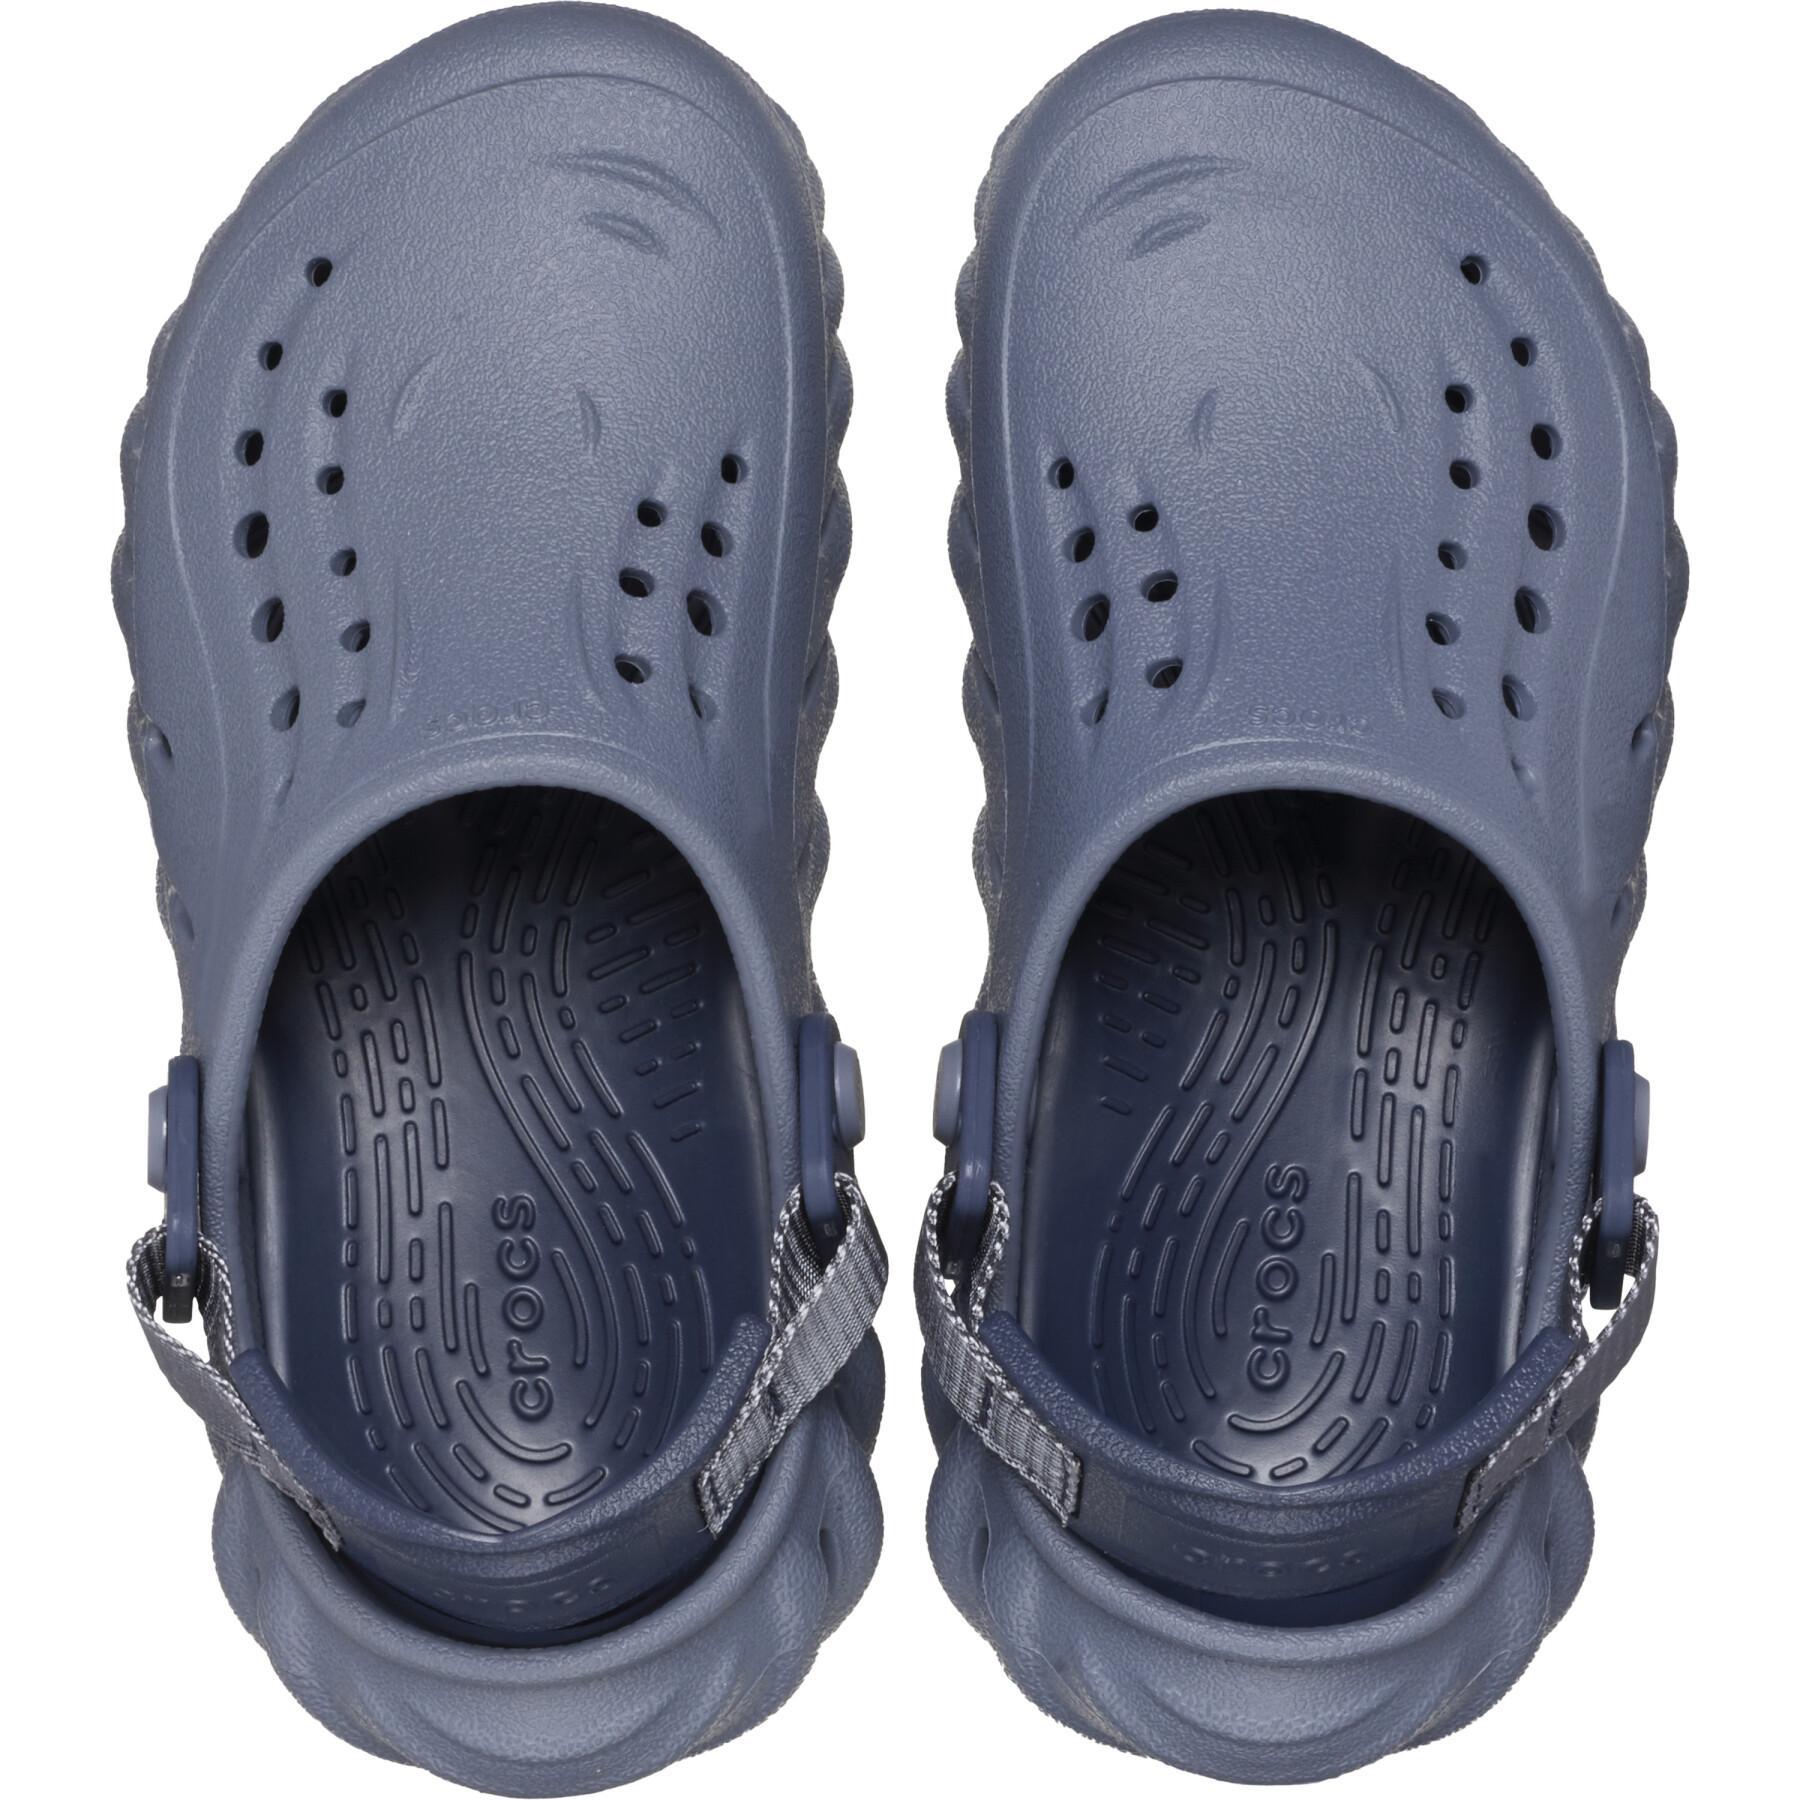 Children's clogs Crocs Echo